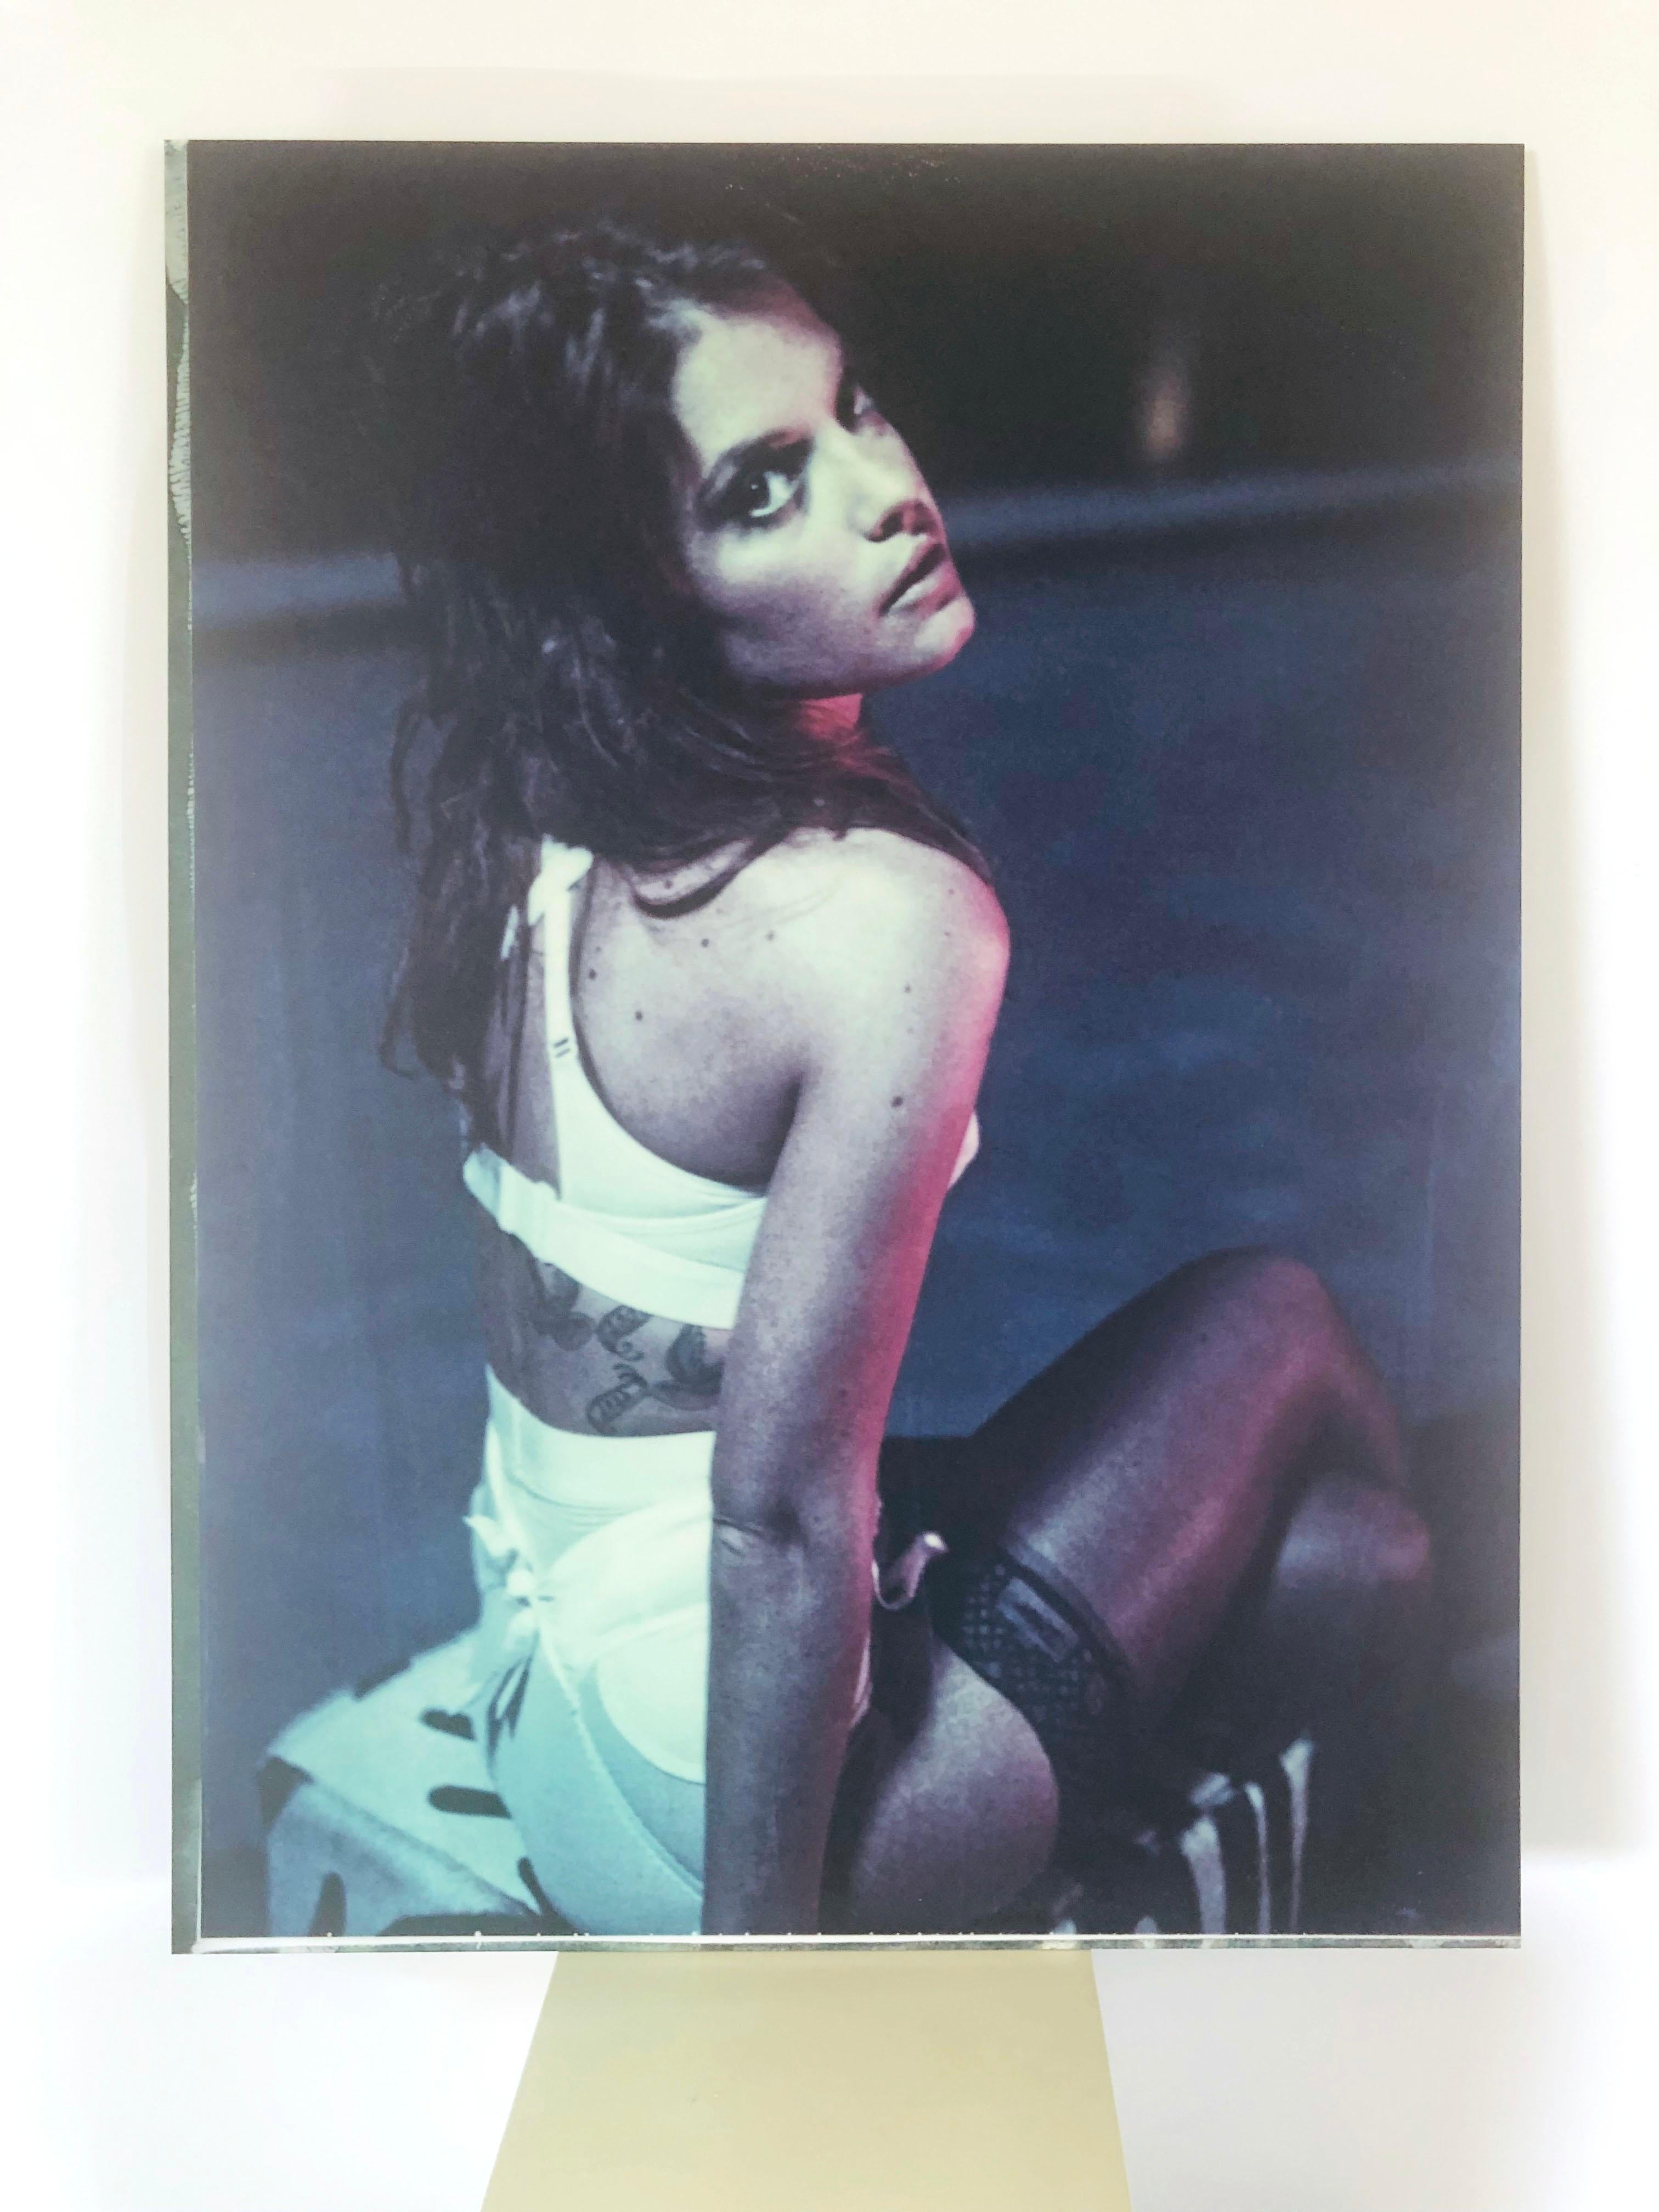 SAINT PETRA #02 - Zeitgenössisch, 21. Jahrhundert, Polaroid, Figurative Fotografie – Photograph von Carmen de Vos